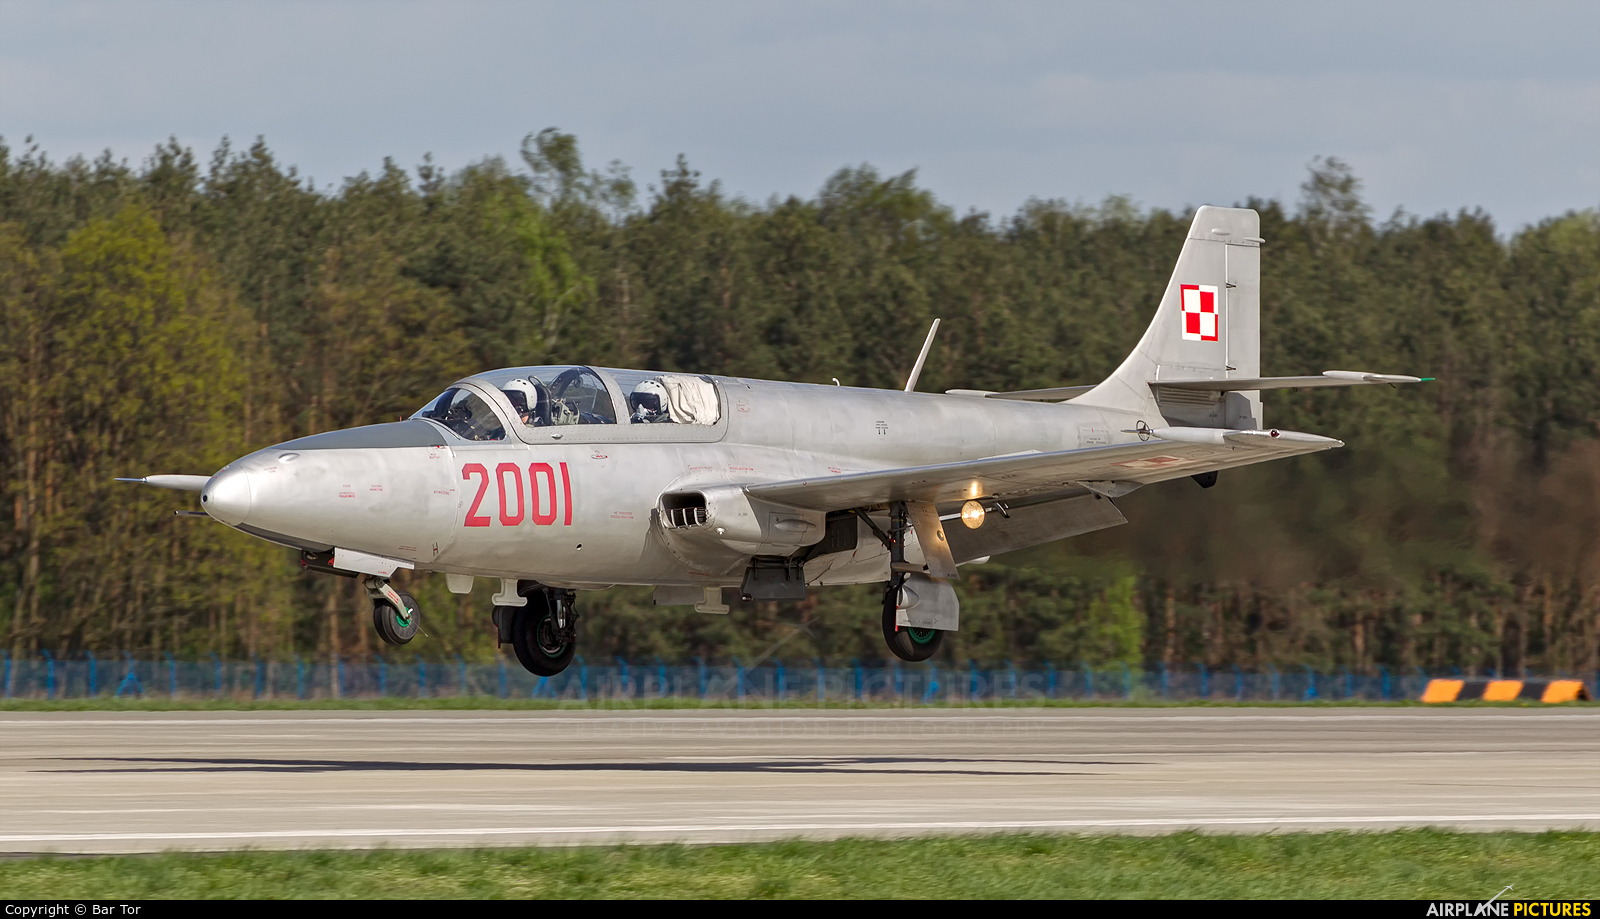 Poland - Air Force 2001 aircraft at Dęblin